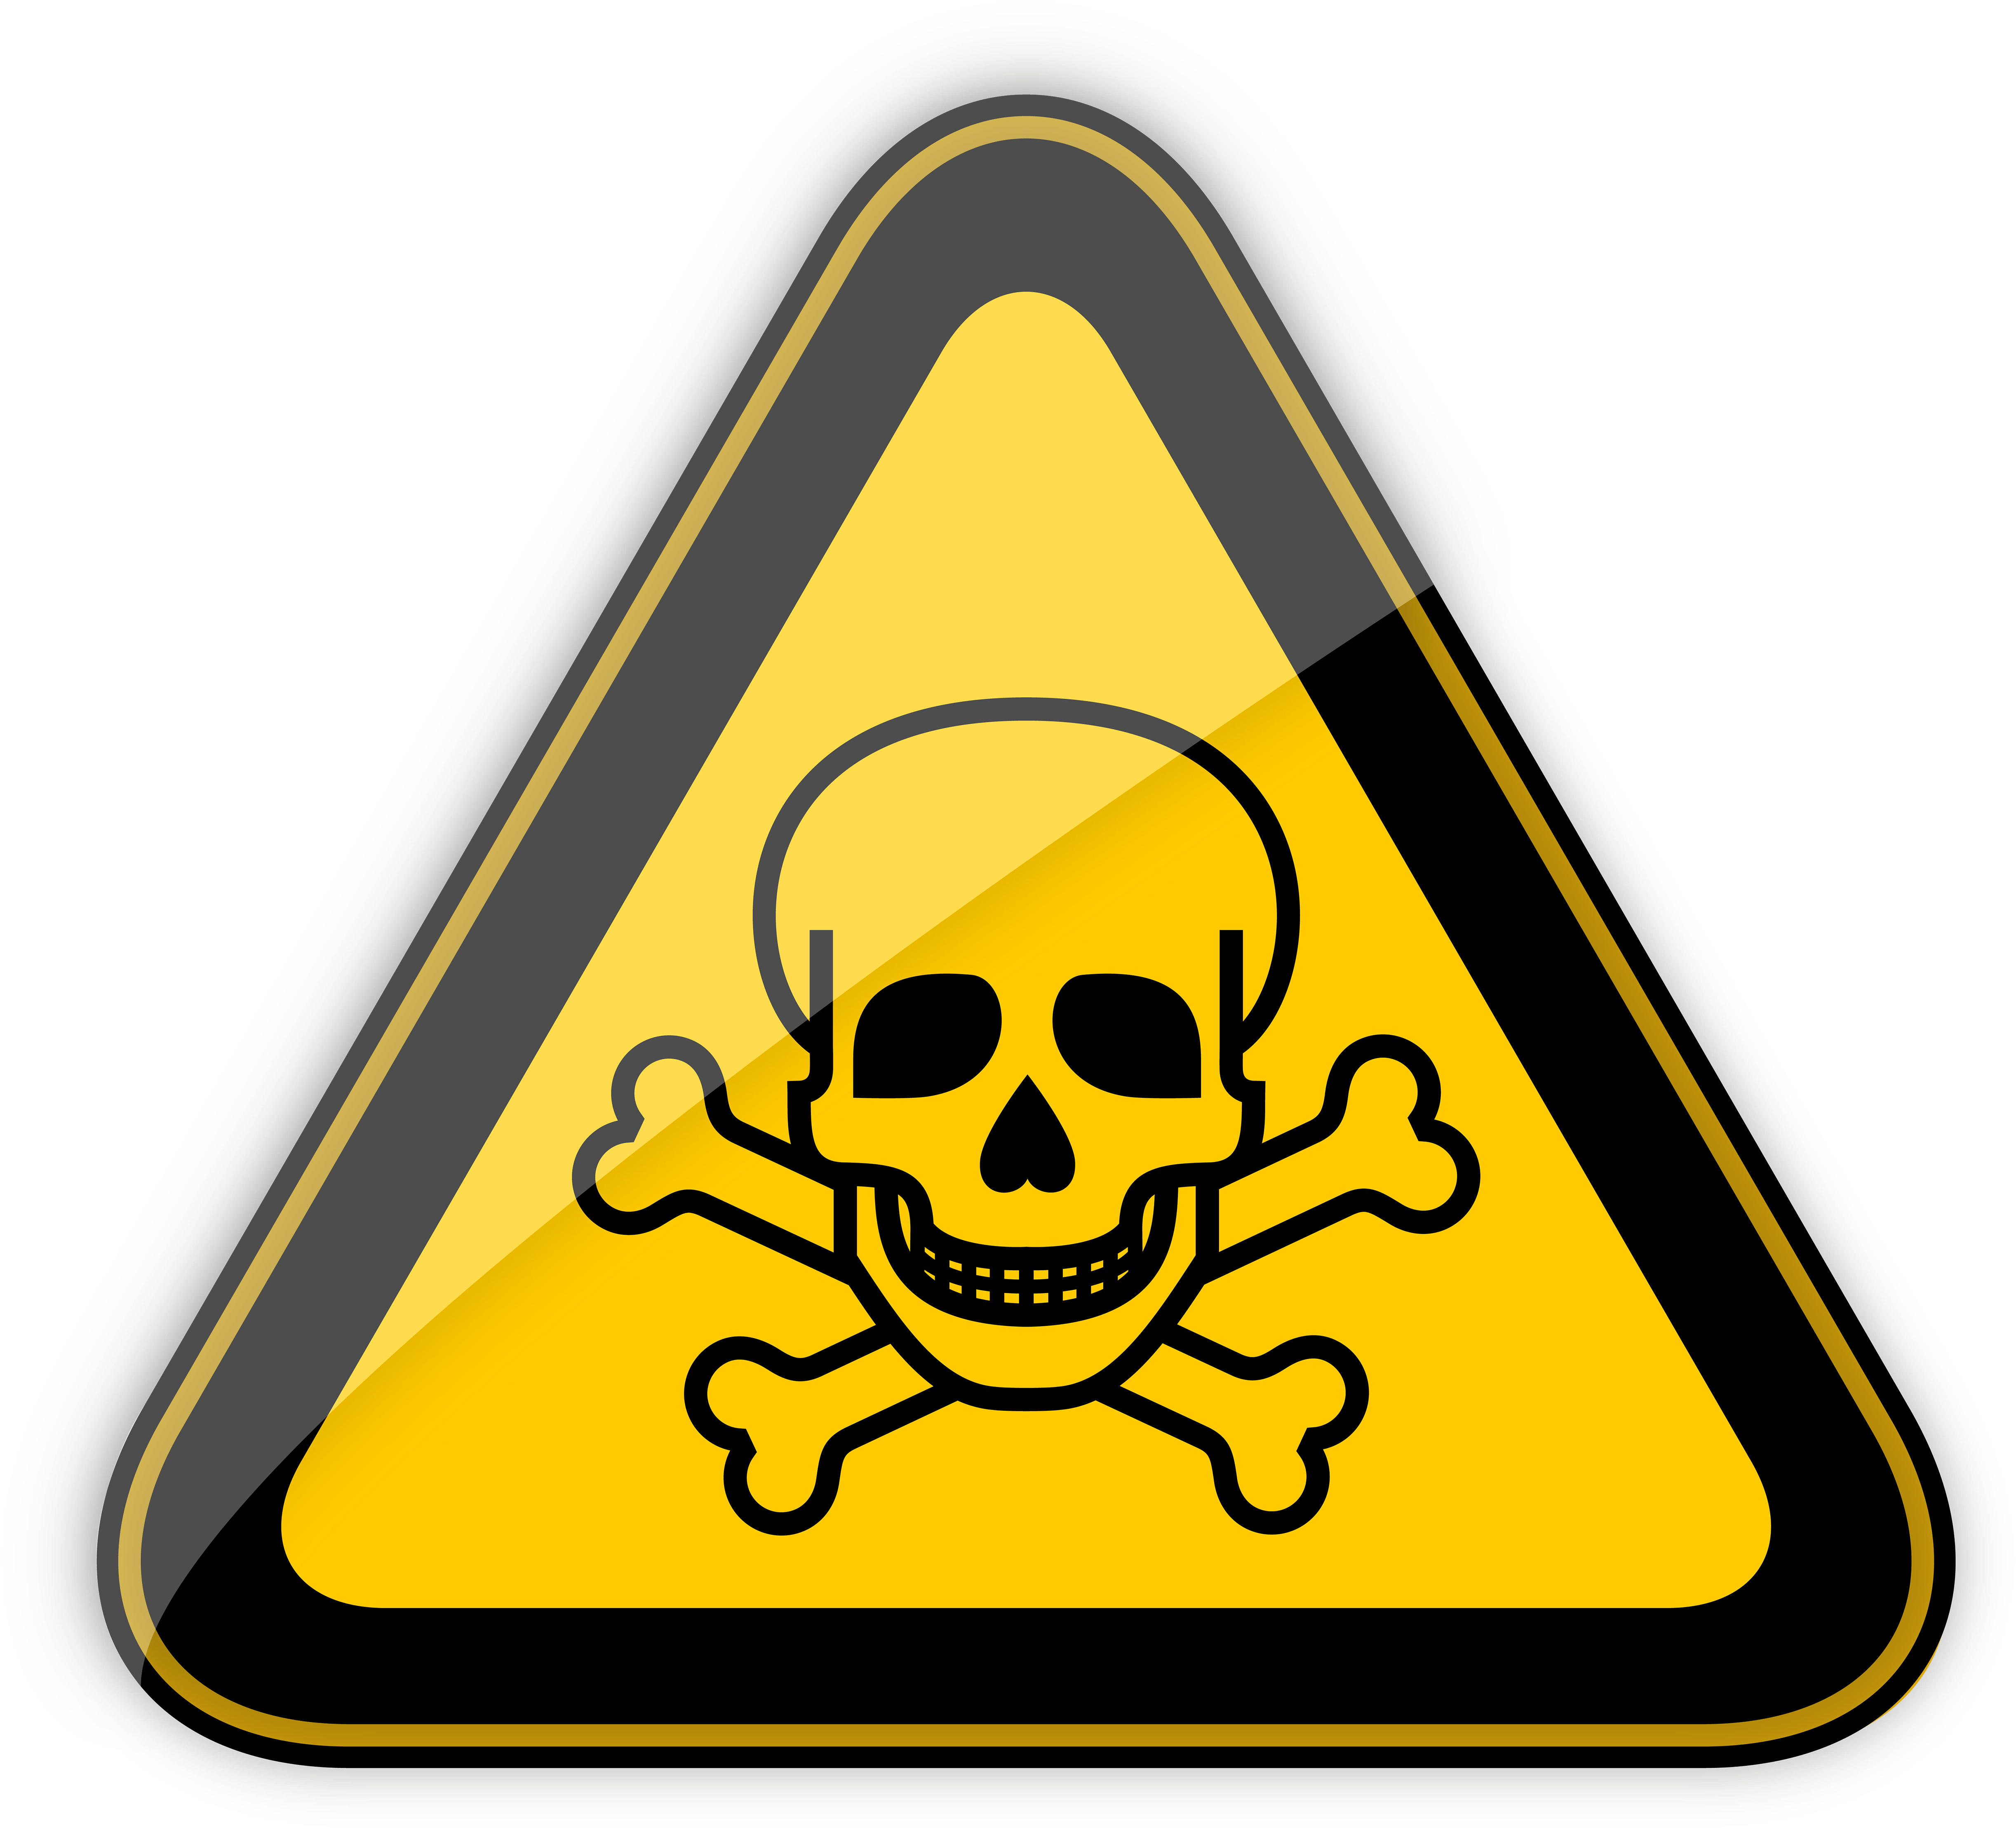 Toxic Warning Sign Png Clipart - Los Riesgos De La Nanotecnologia Transpare...